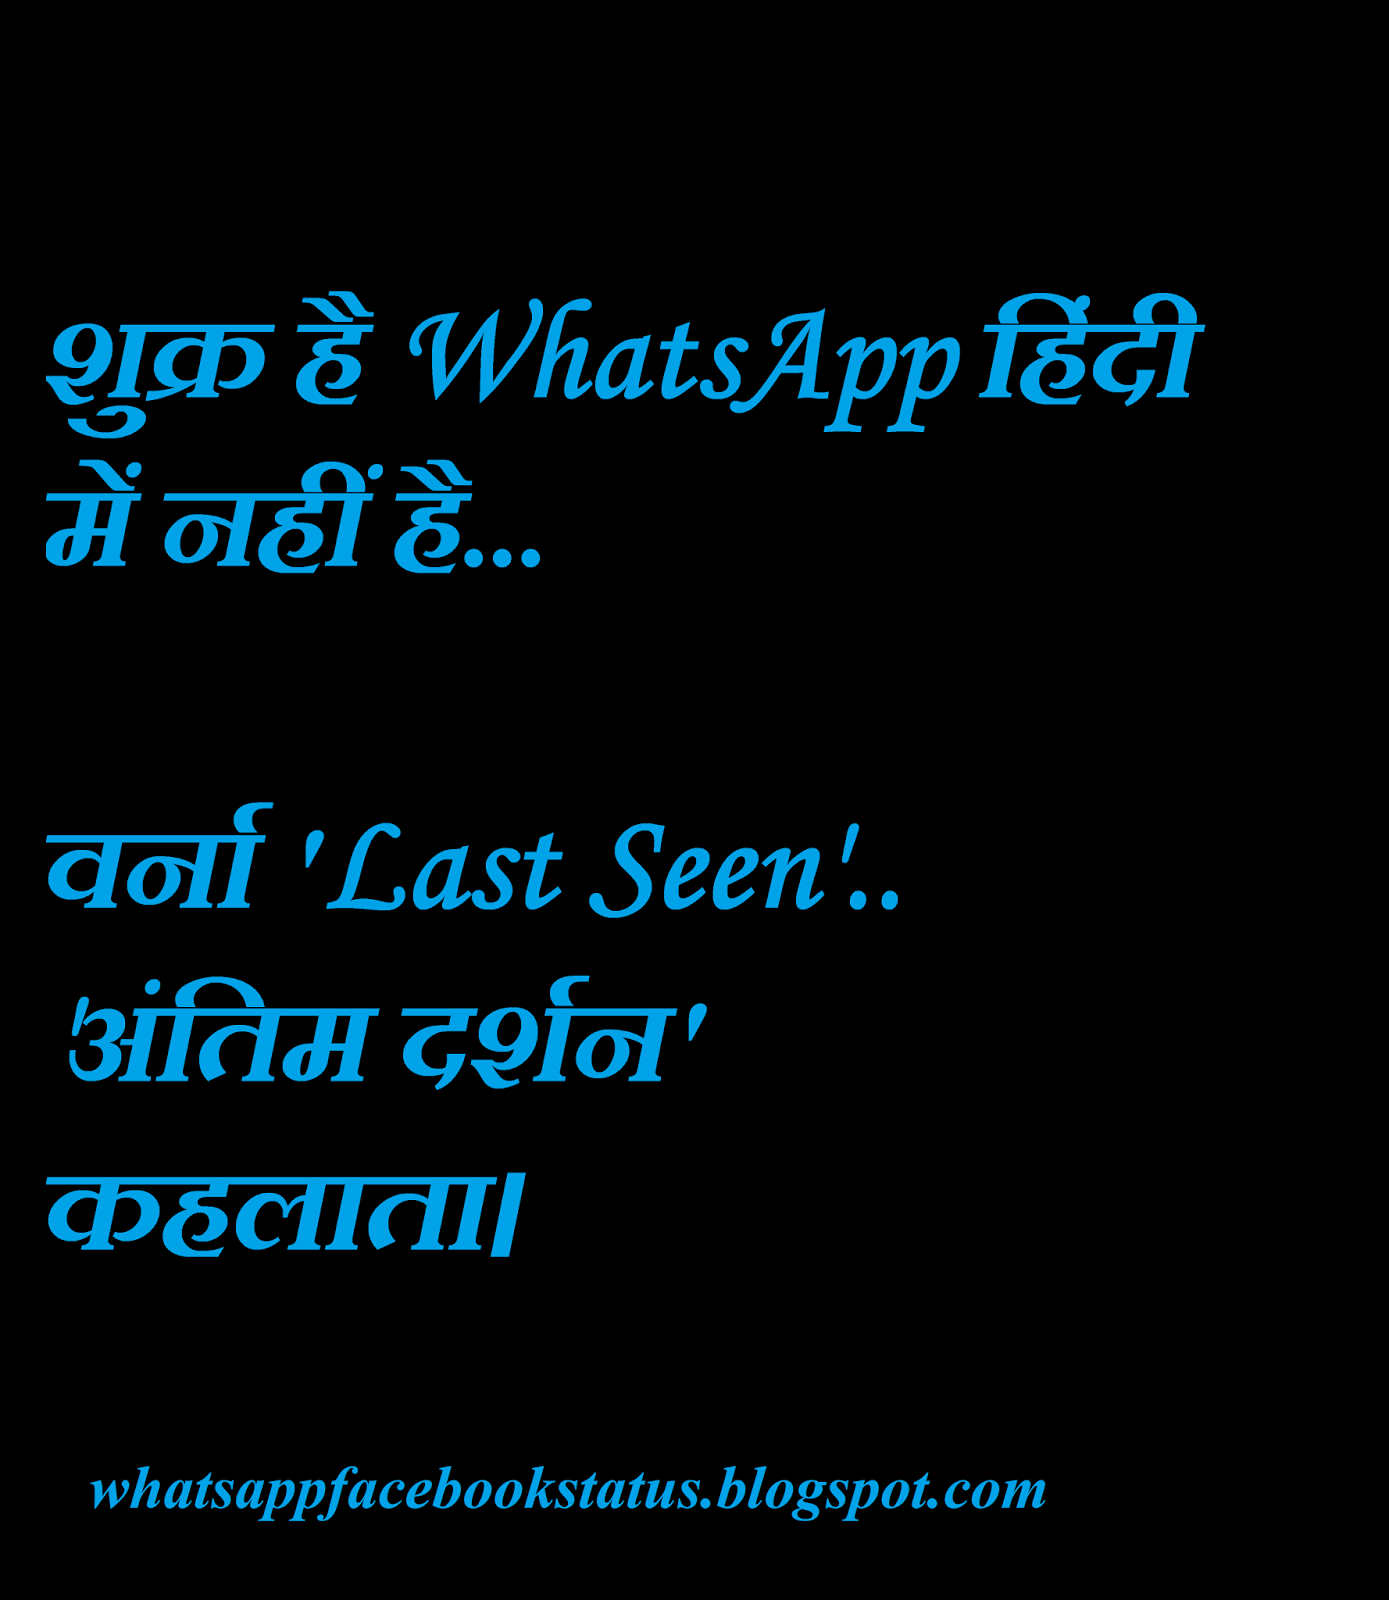 Whatsapp Last Seen Funny Status for Facebook Whatsapp